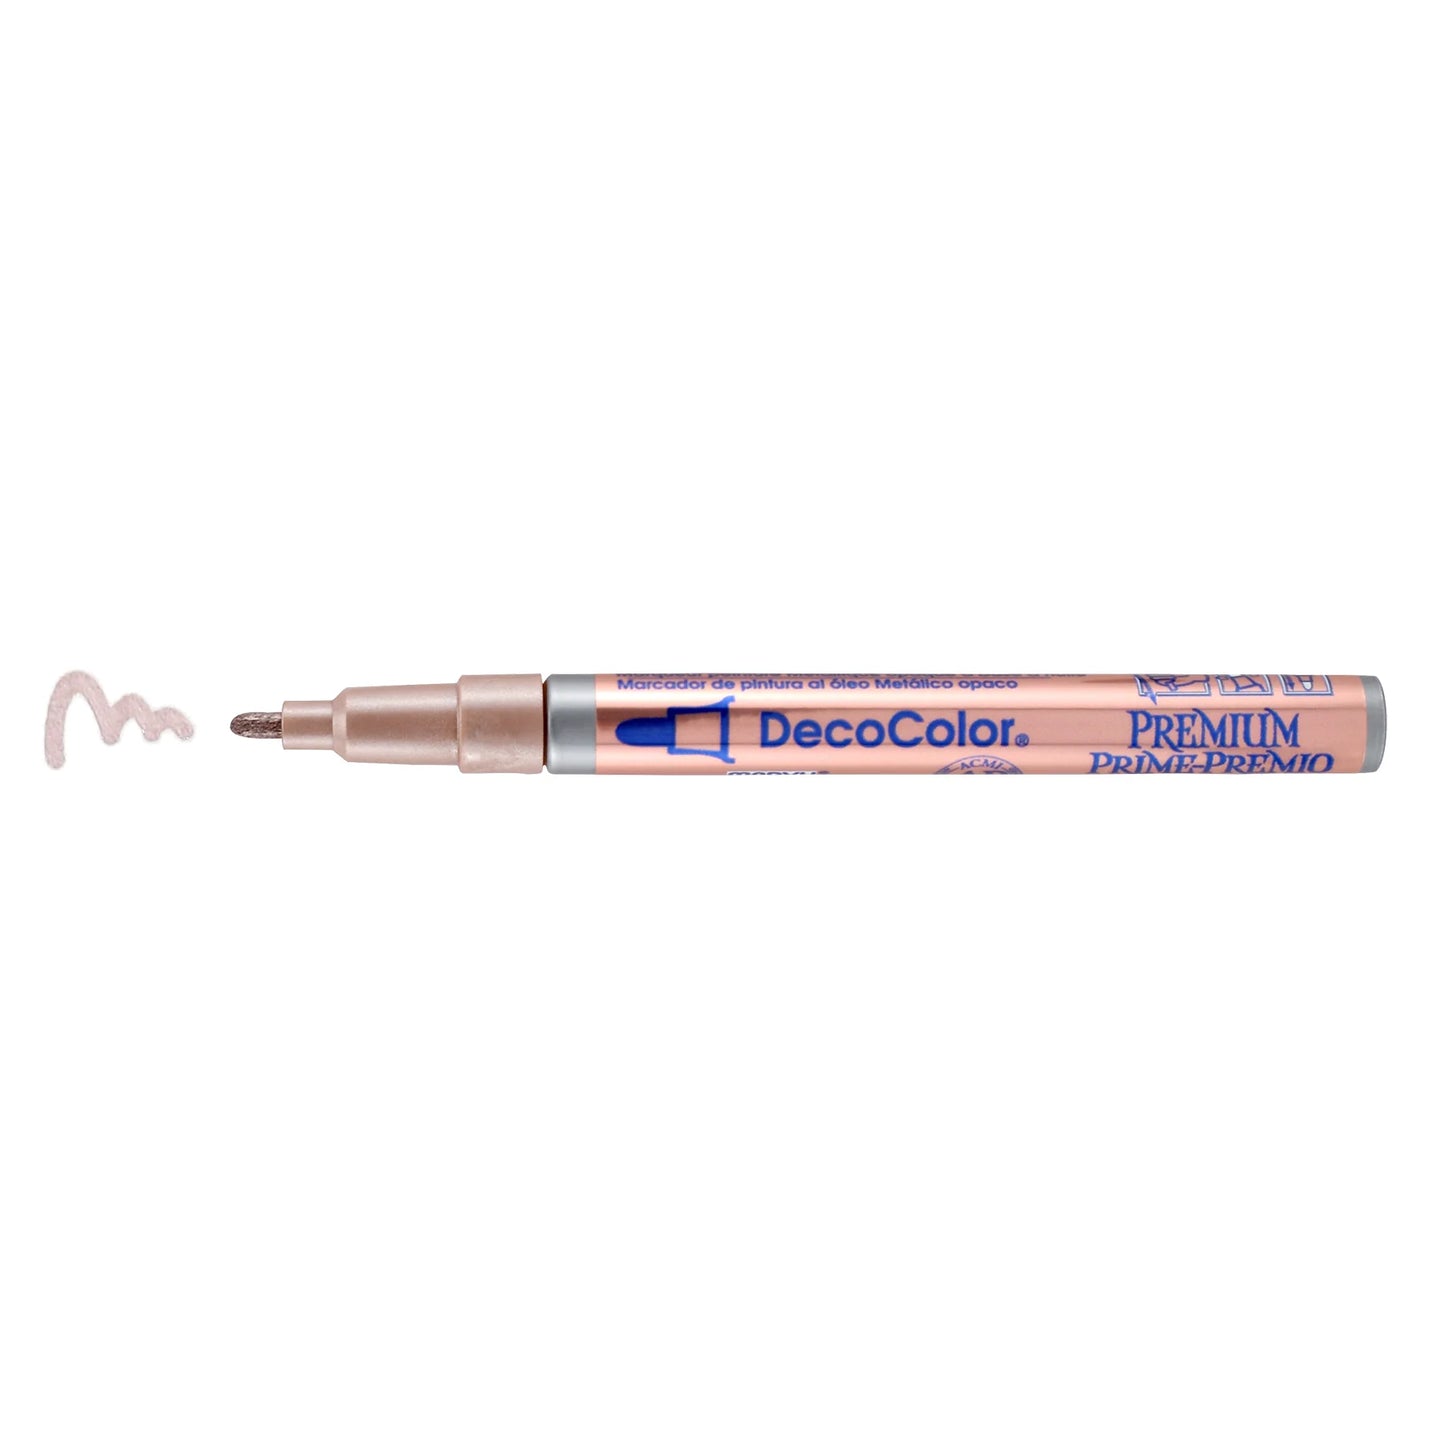 DecoColor® Premium Paint Pen · Marvy Uchida